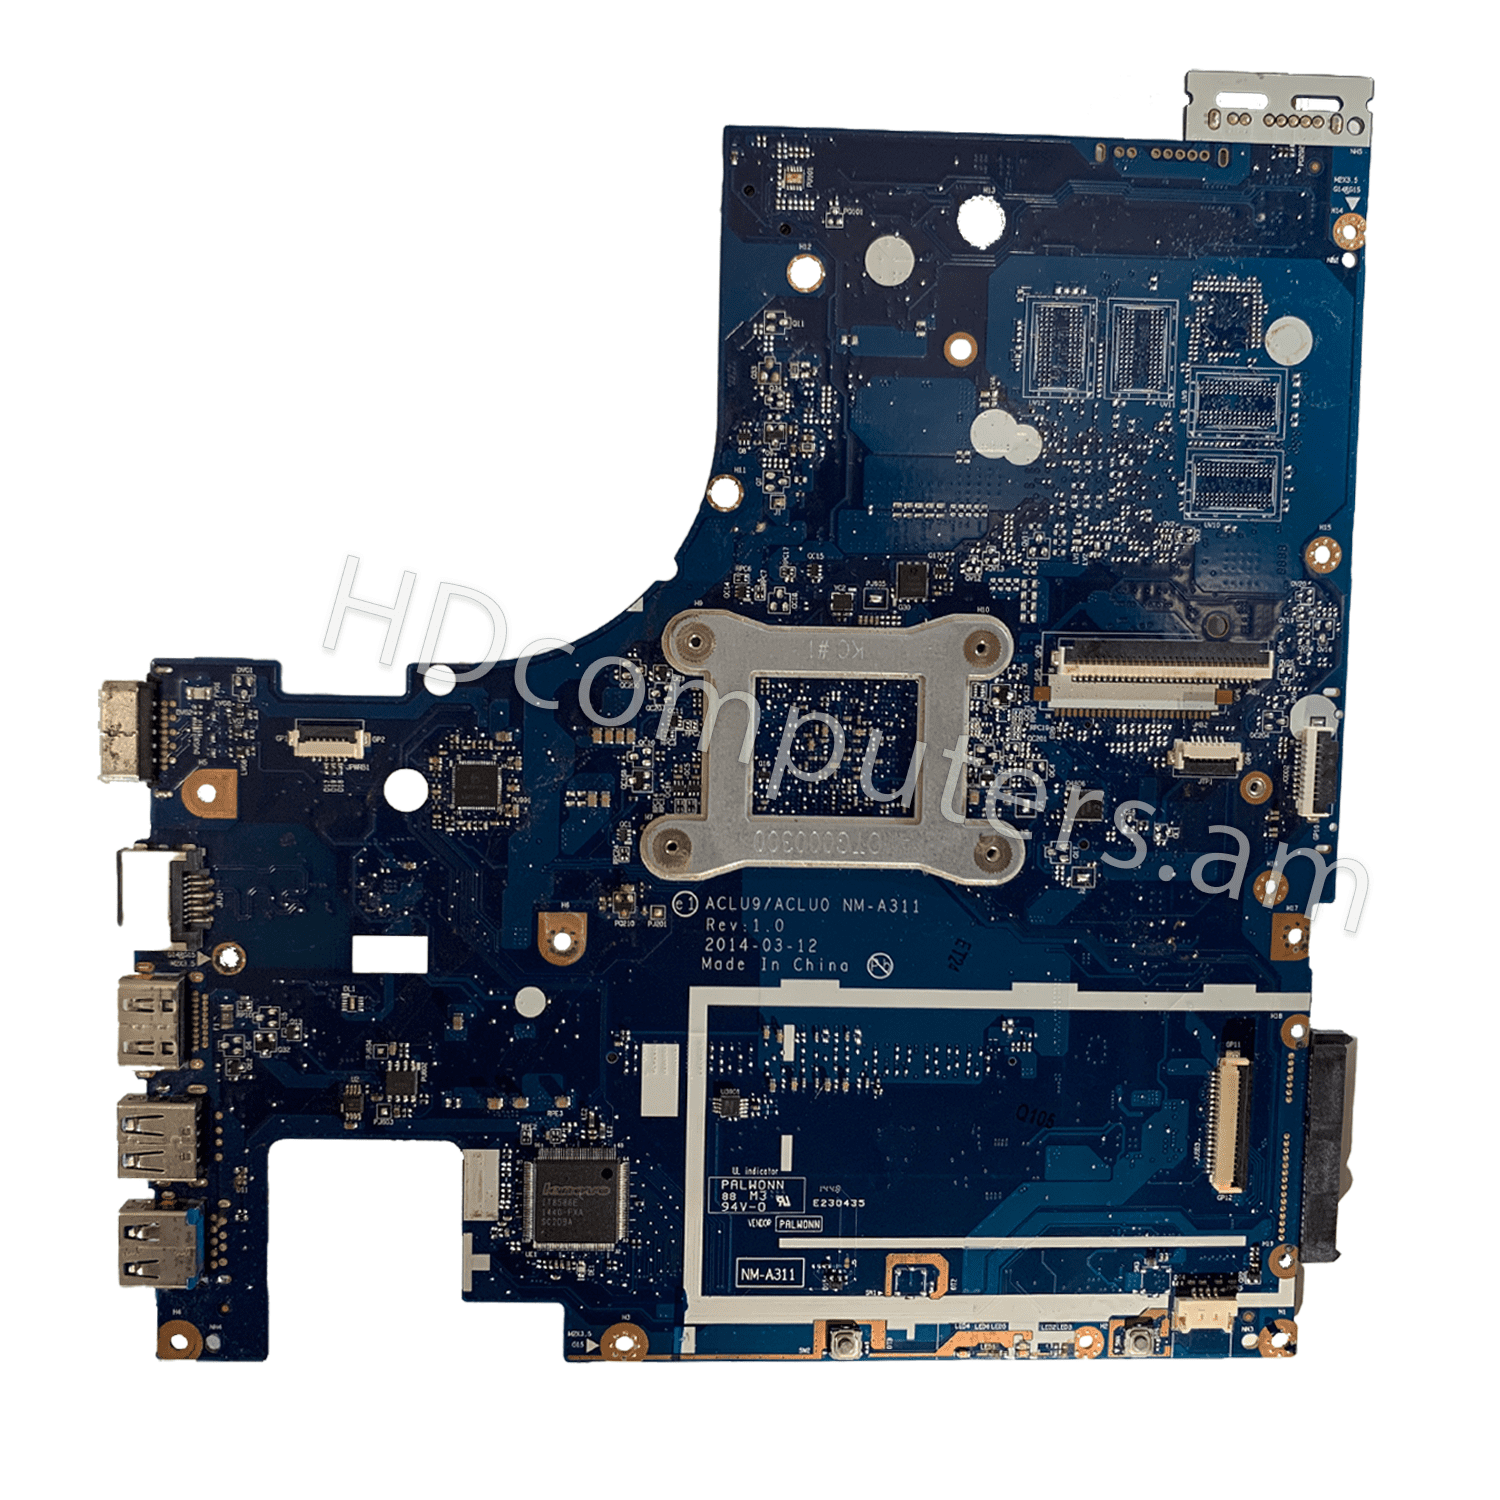 Նոթբուքի մայրասալիկ - Lenovo G50-30 ACLU9/ACLU0 NM-A311 REV:1.0 CPU N2830